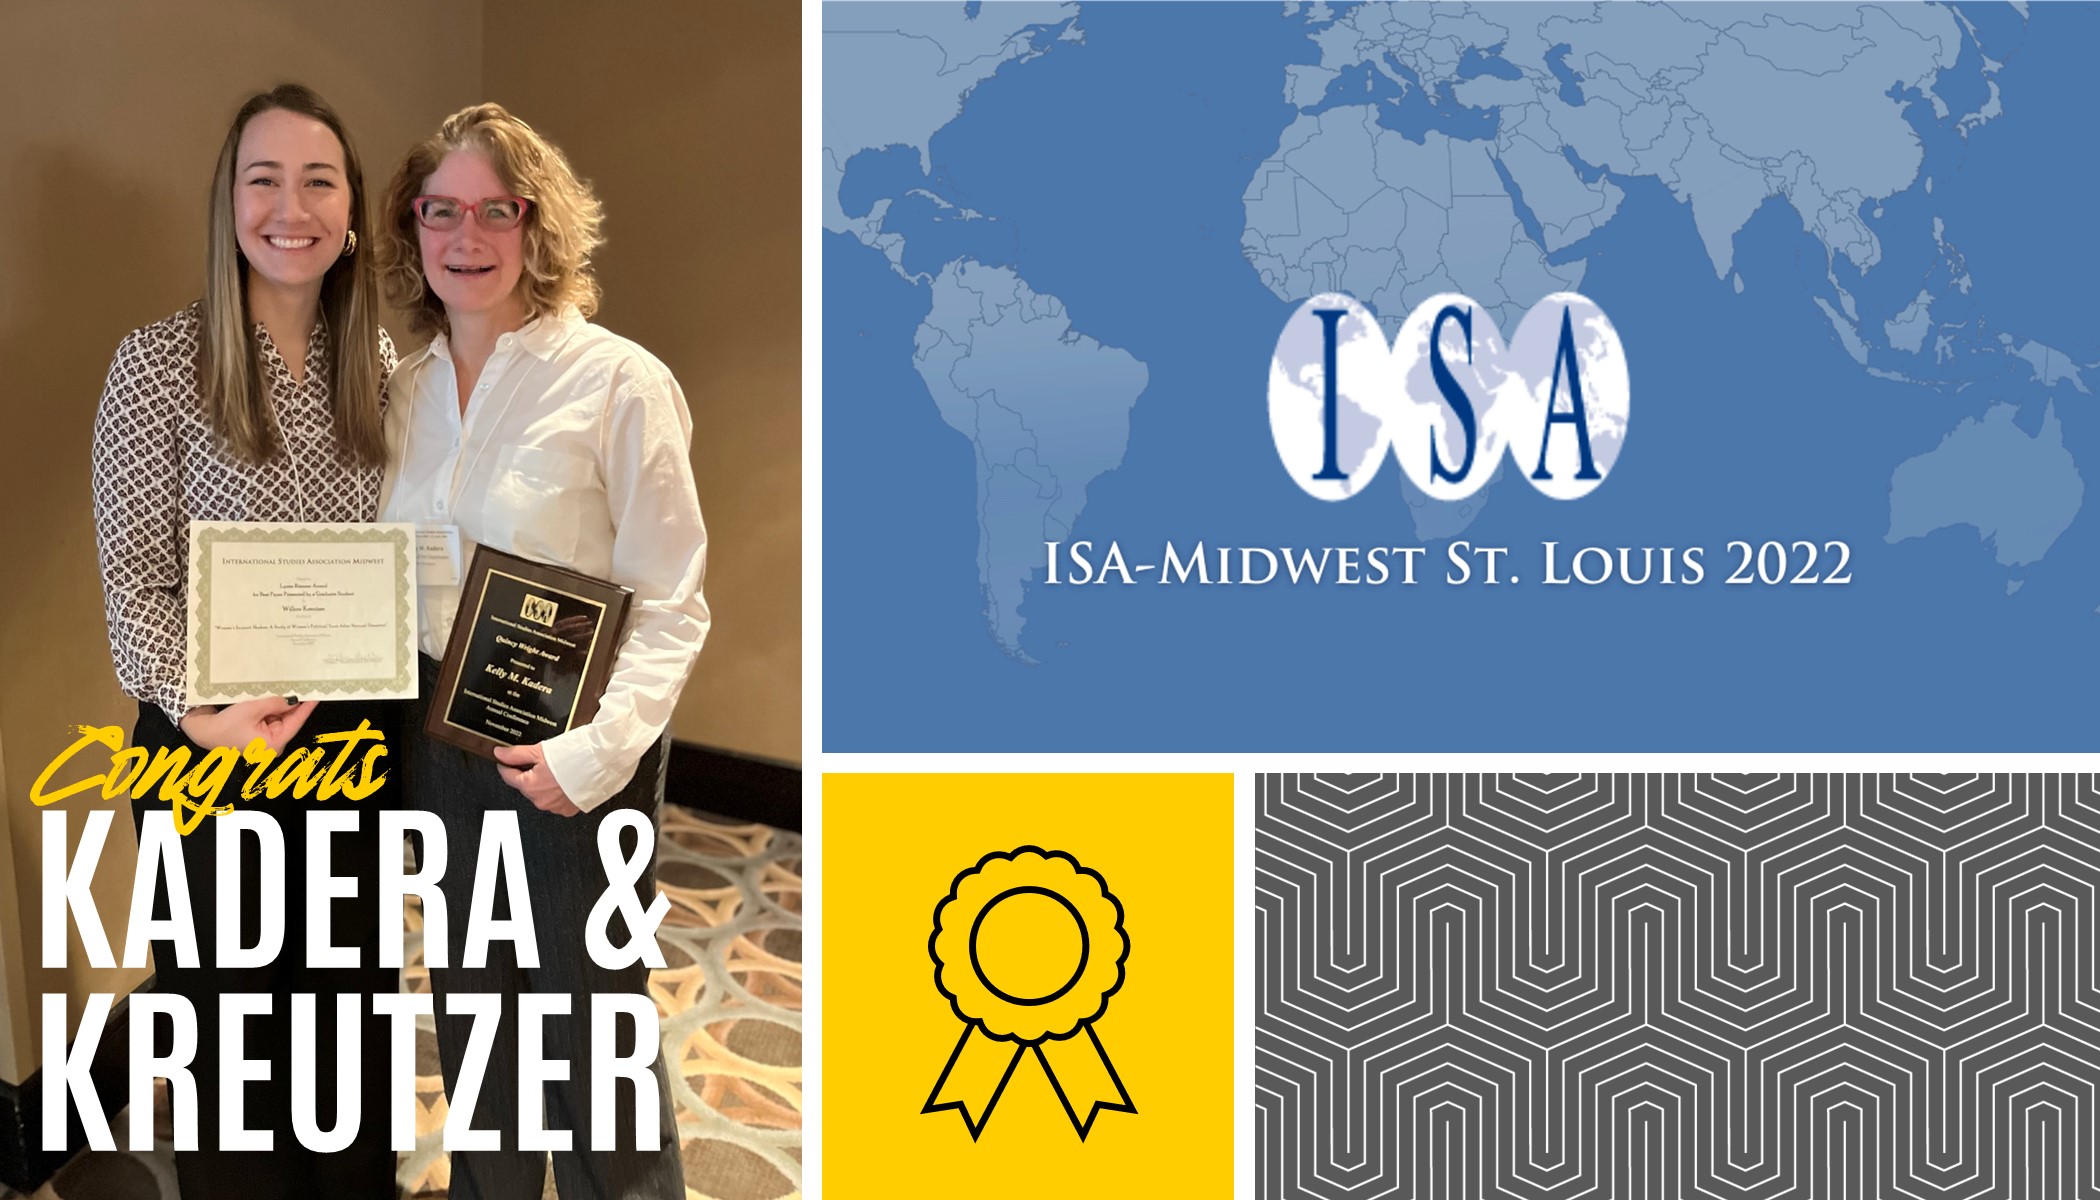 International Studies Association Midwest award winners Kelly Kadera and  Willow Kreutzer